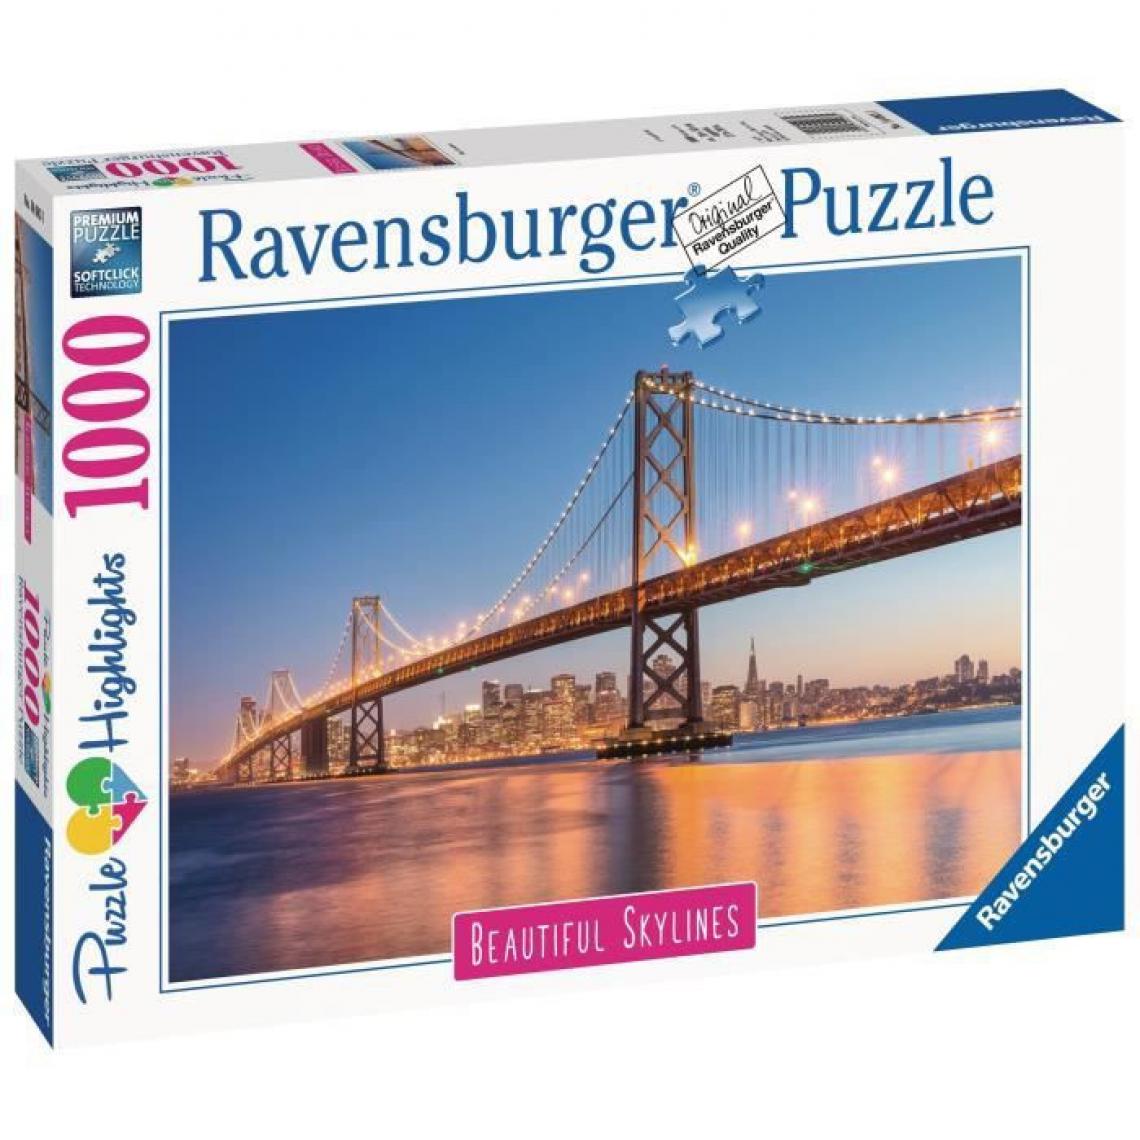 Ravensburger - RAVENSBURGER - Puzzle 1000 pieces San Francisco Puzzle Highlights - Animaux